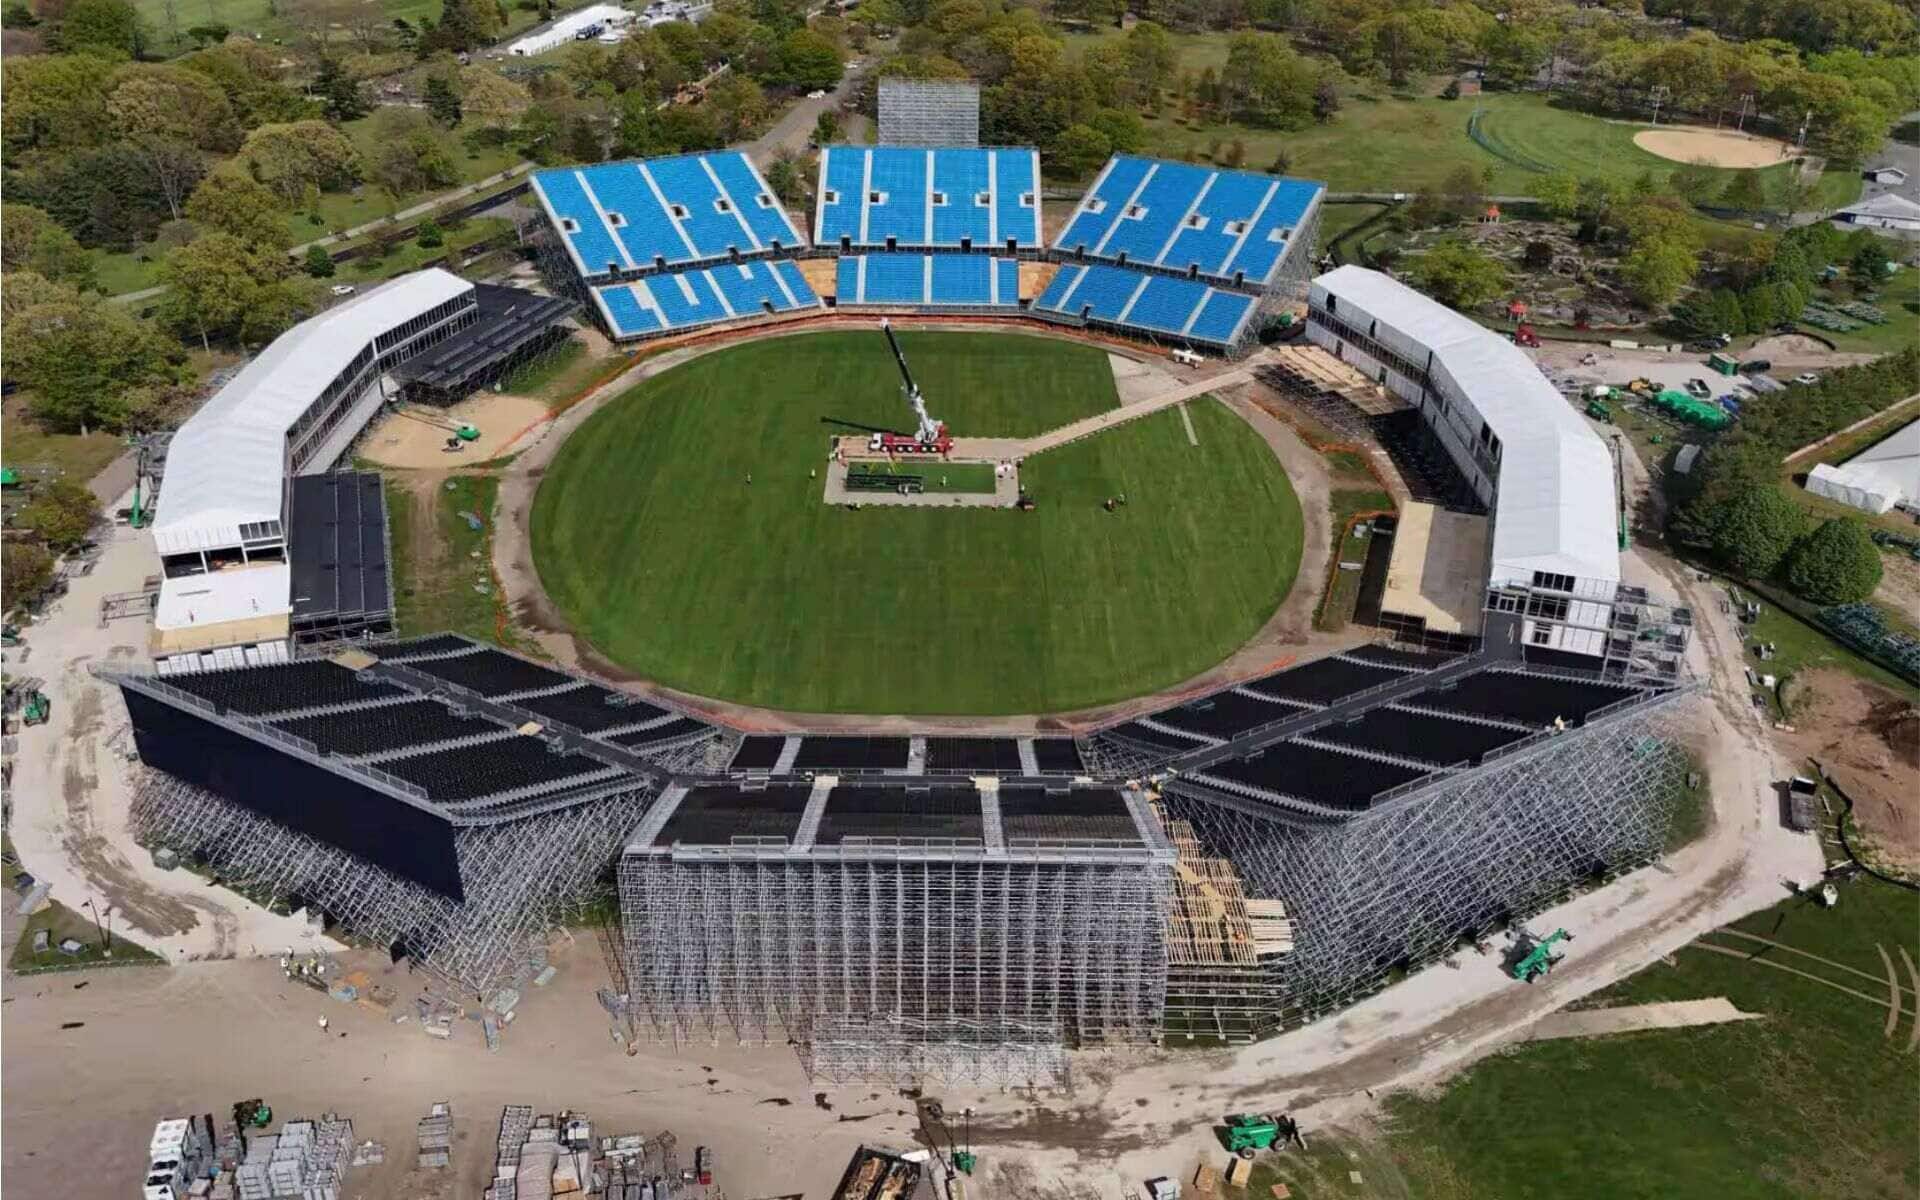 A wonderful view of Nassau County International Cricket Stadium (x.com)